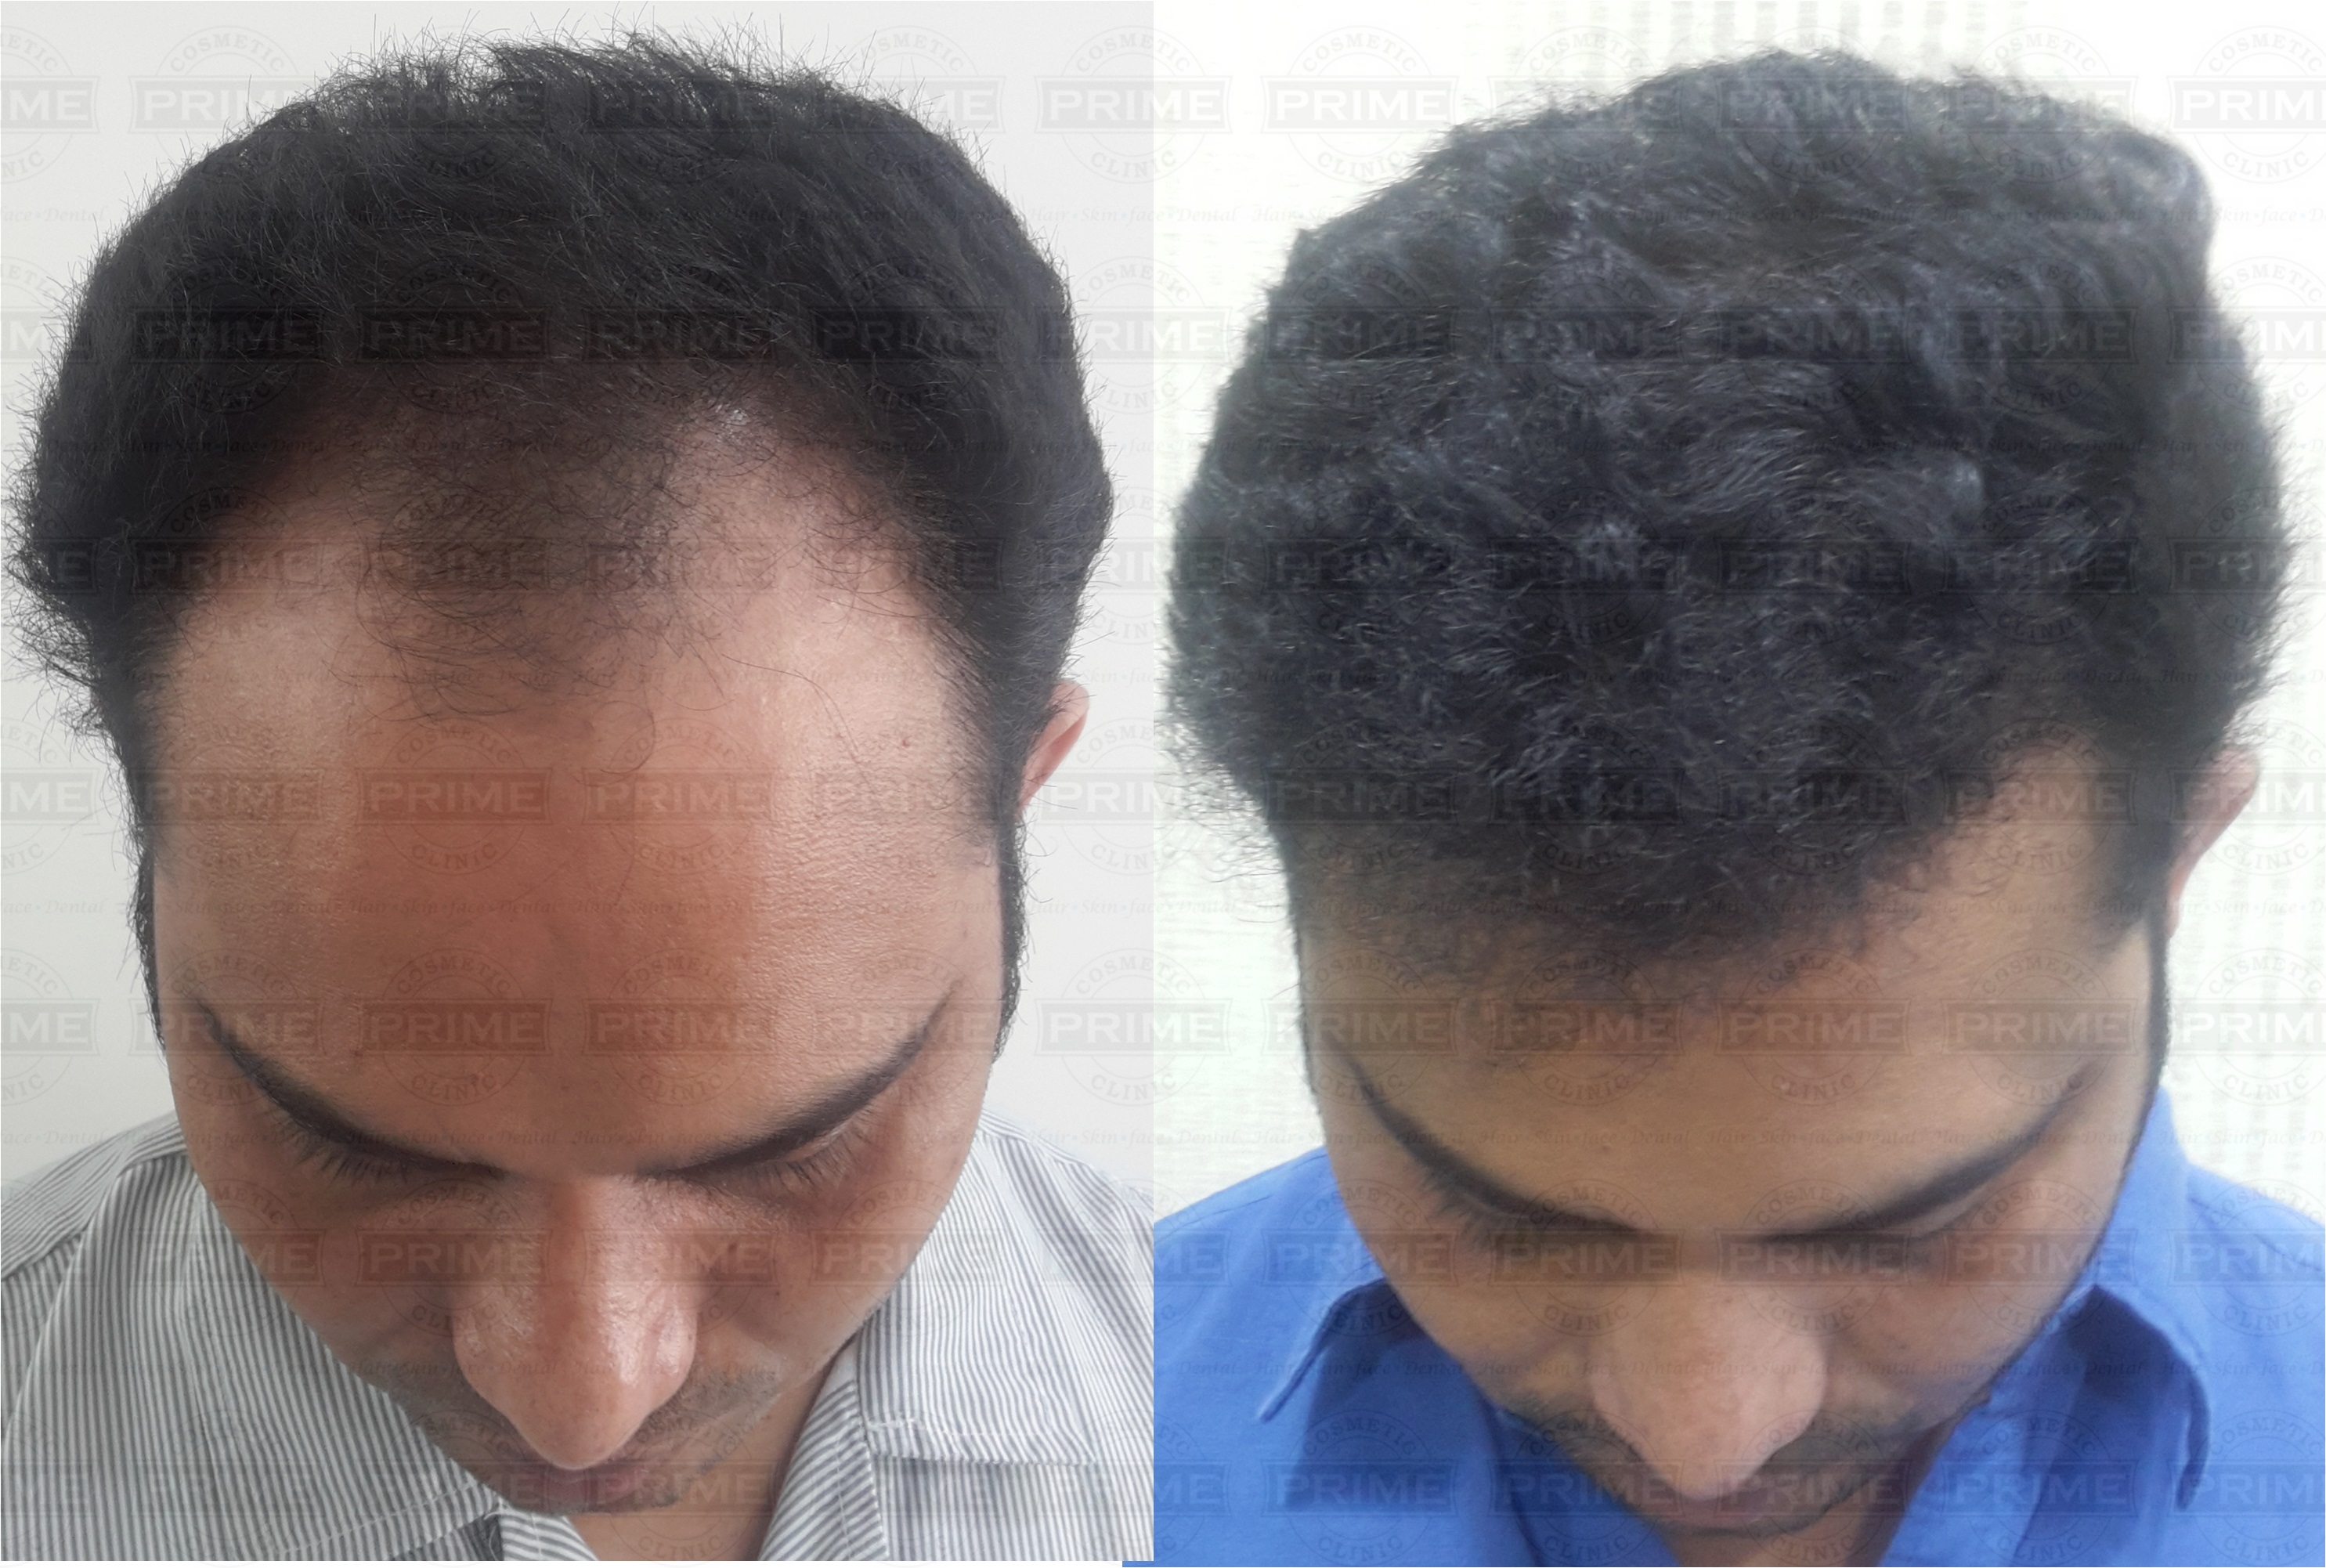 Hair transplant cost in Mumbai - Hair Transplant India - Prime Hair Studio